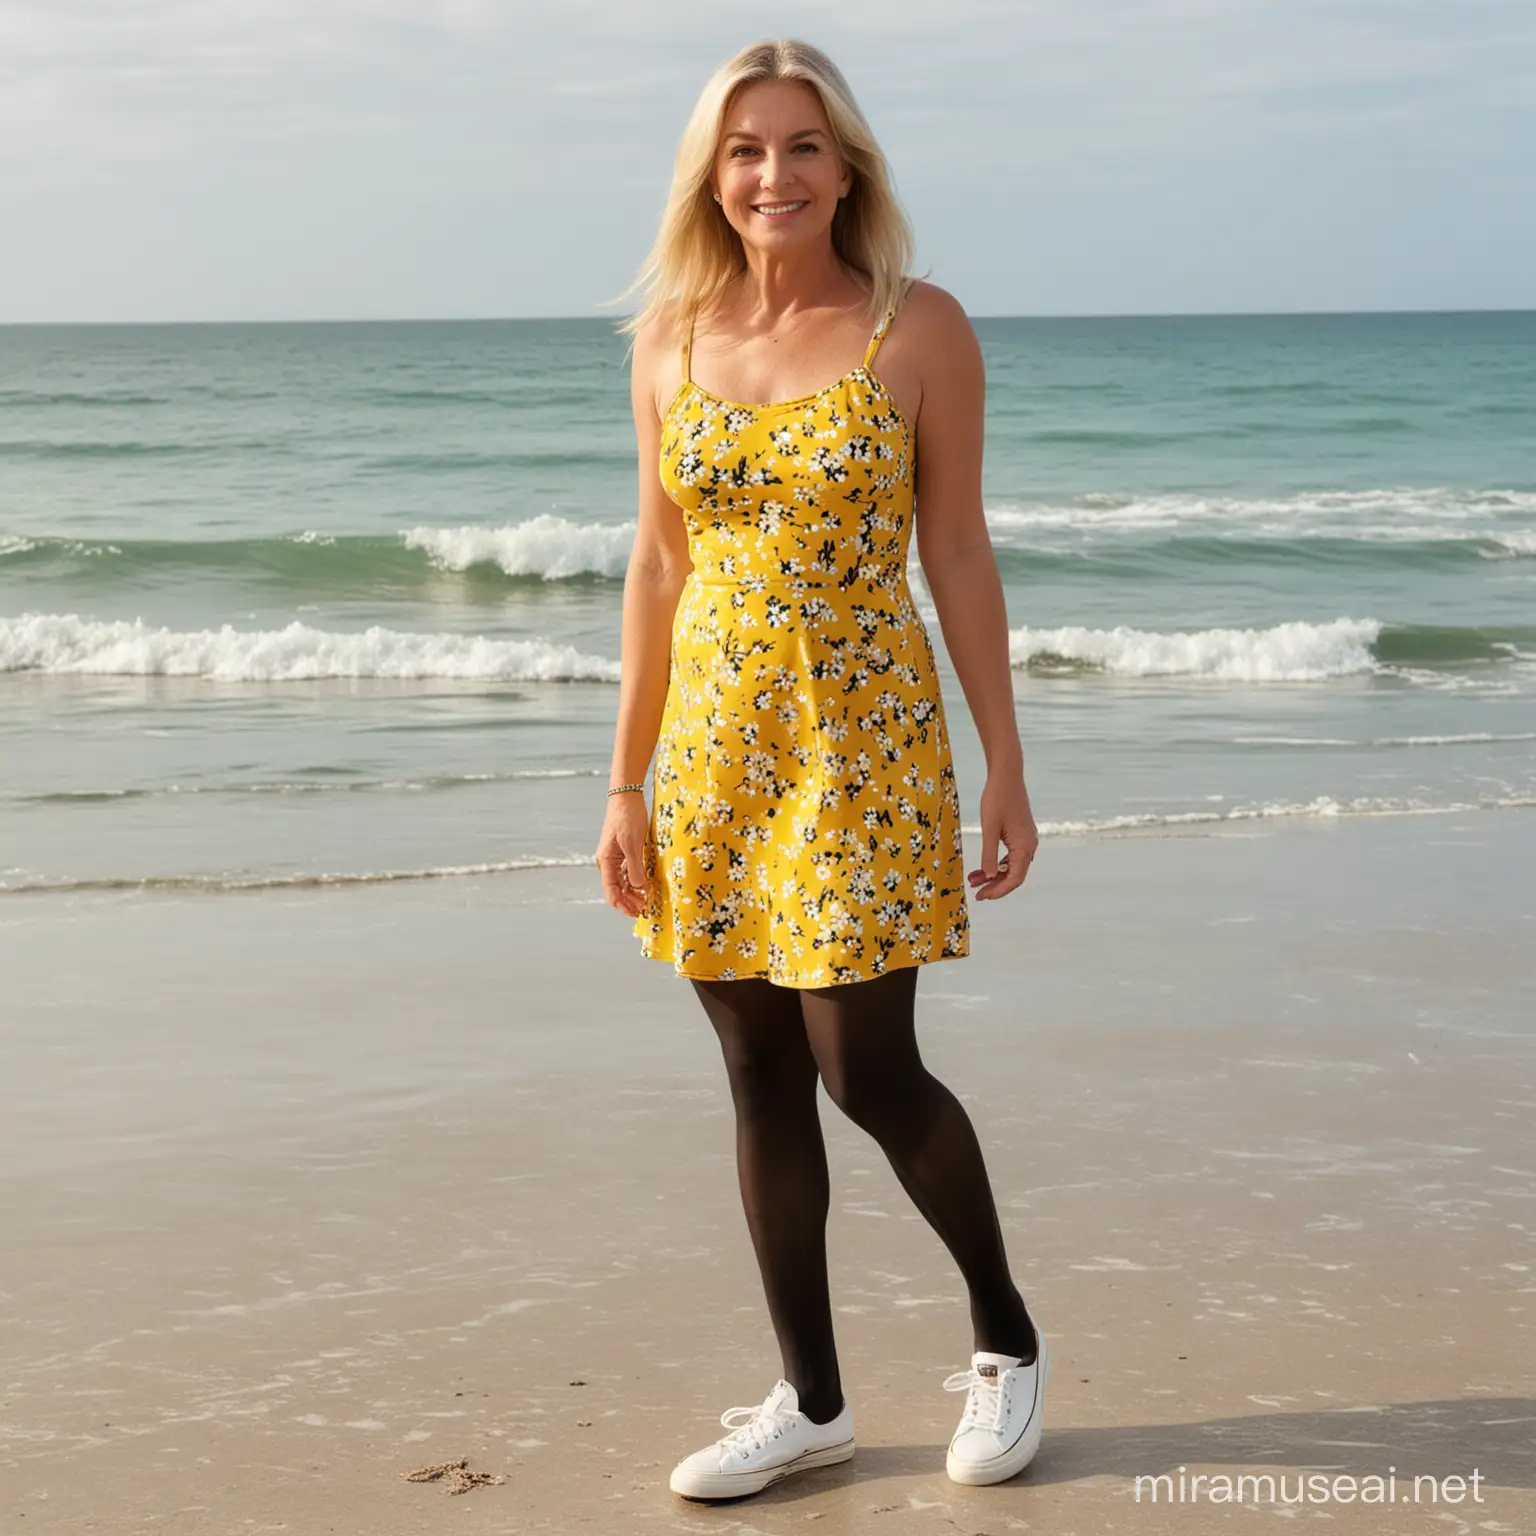 Mature Woman in Vibrant Sundress on Florida Beach